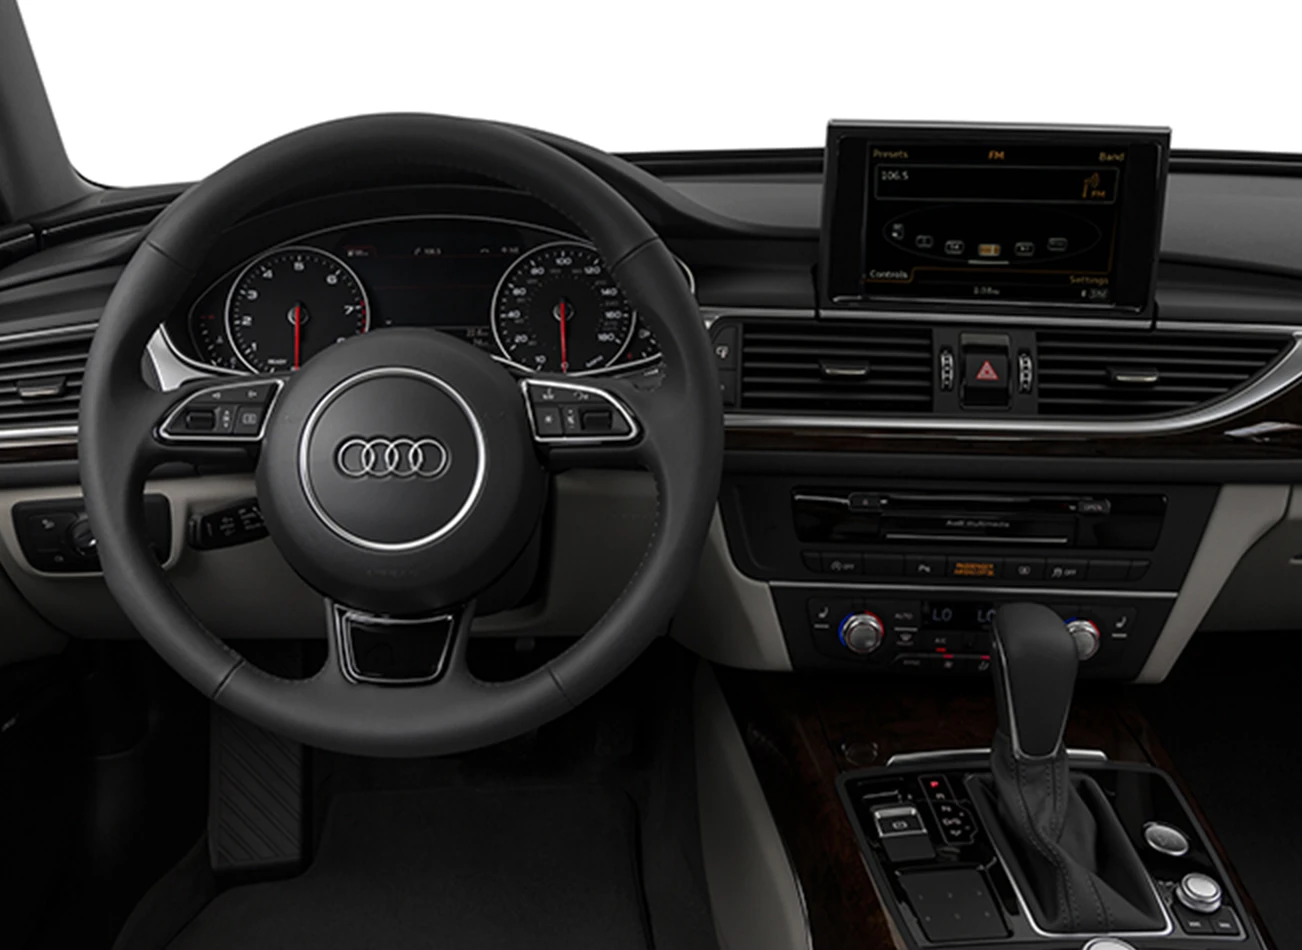 2018 Audi A6 Review: Dashboard | CarMax